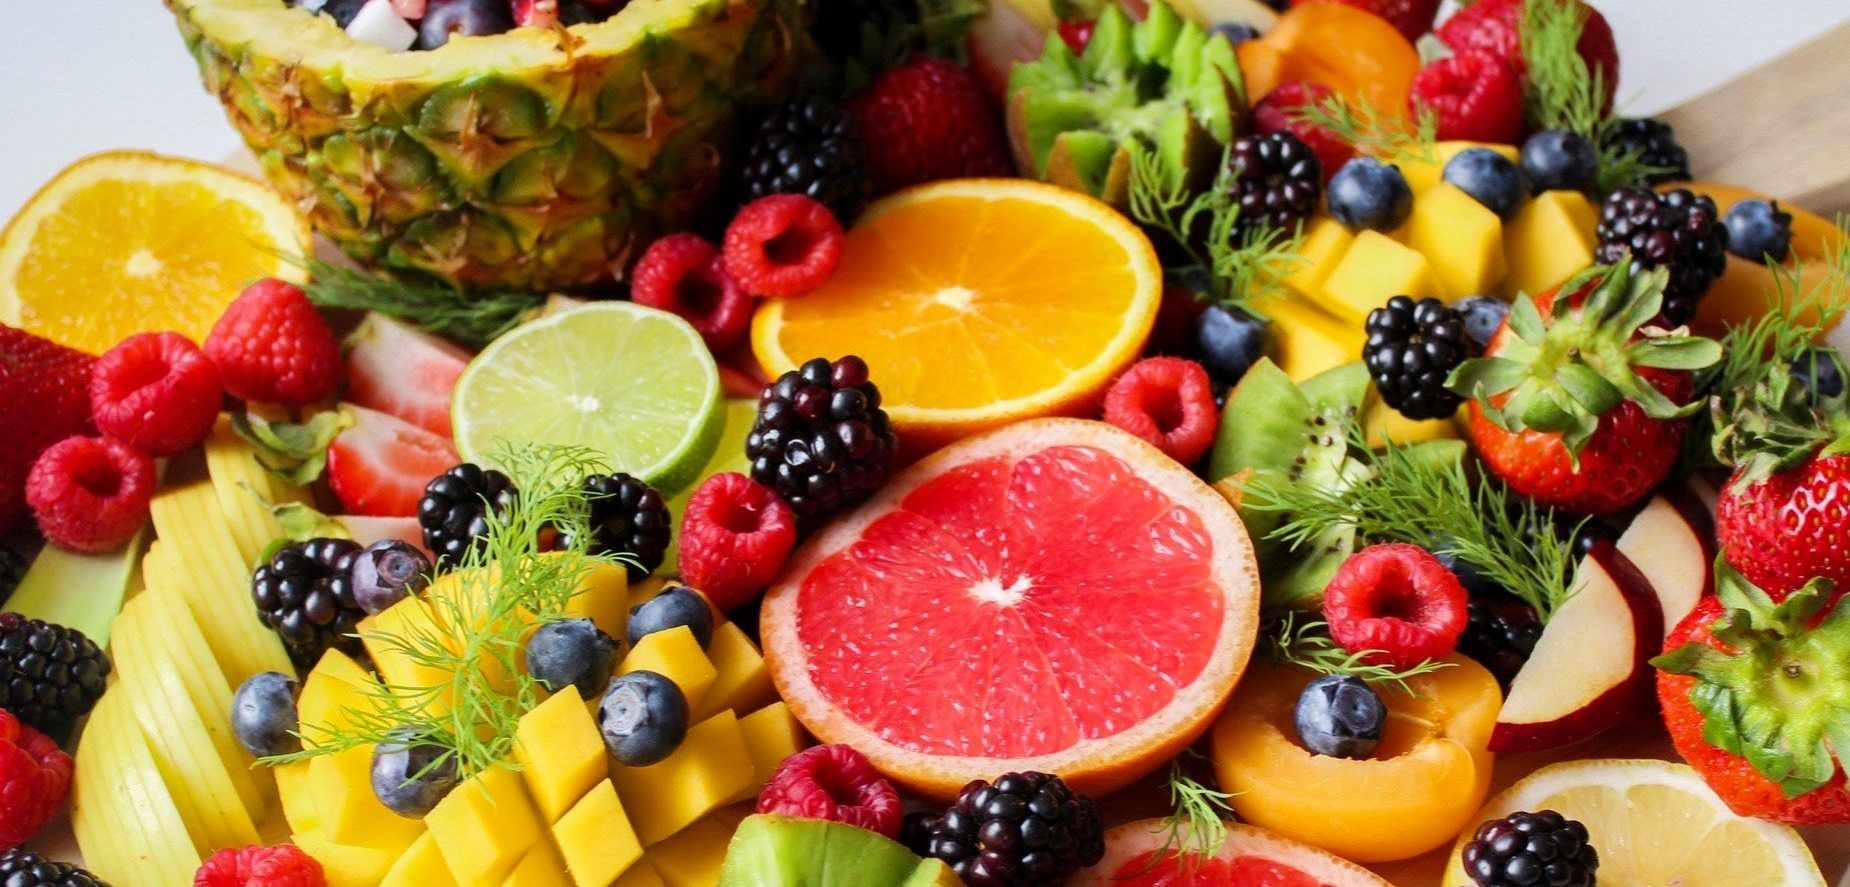 Ilustrasi sayur dan buah.